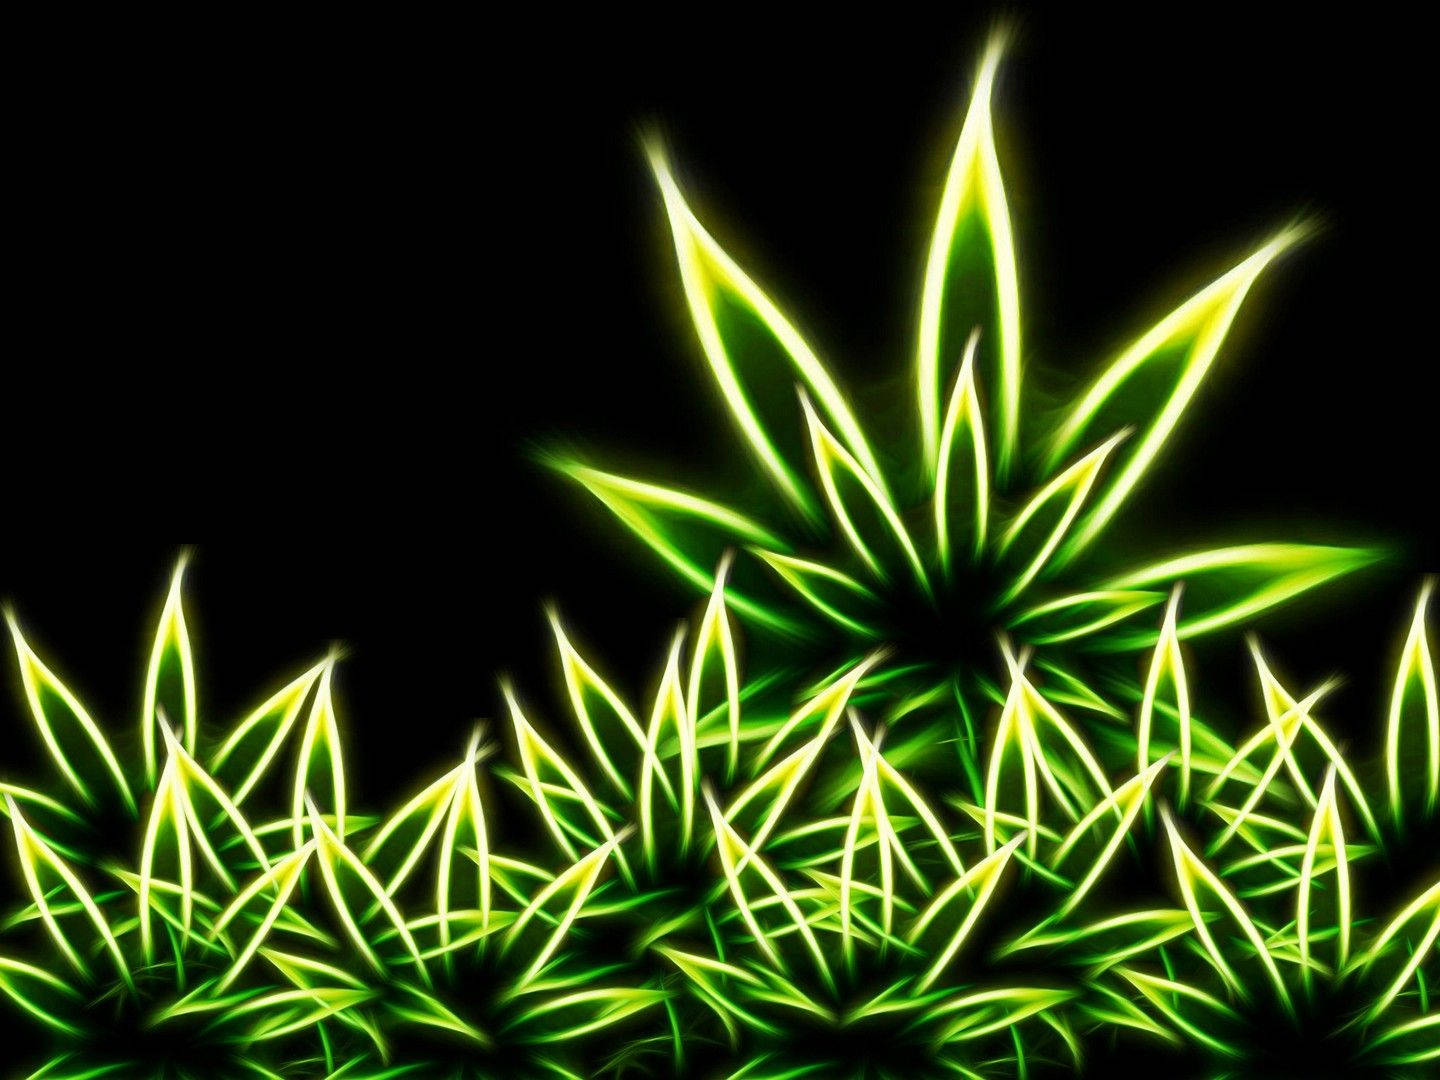 Neonweed Leaf Graphics: Neonklotterbladsgrafik. Wallpaper